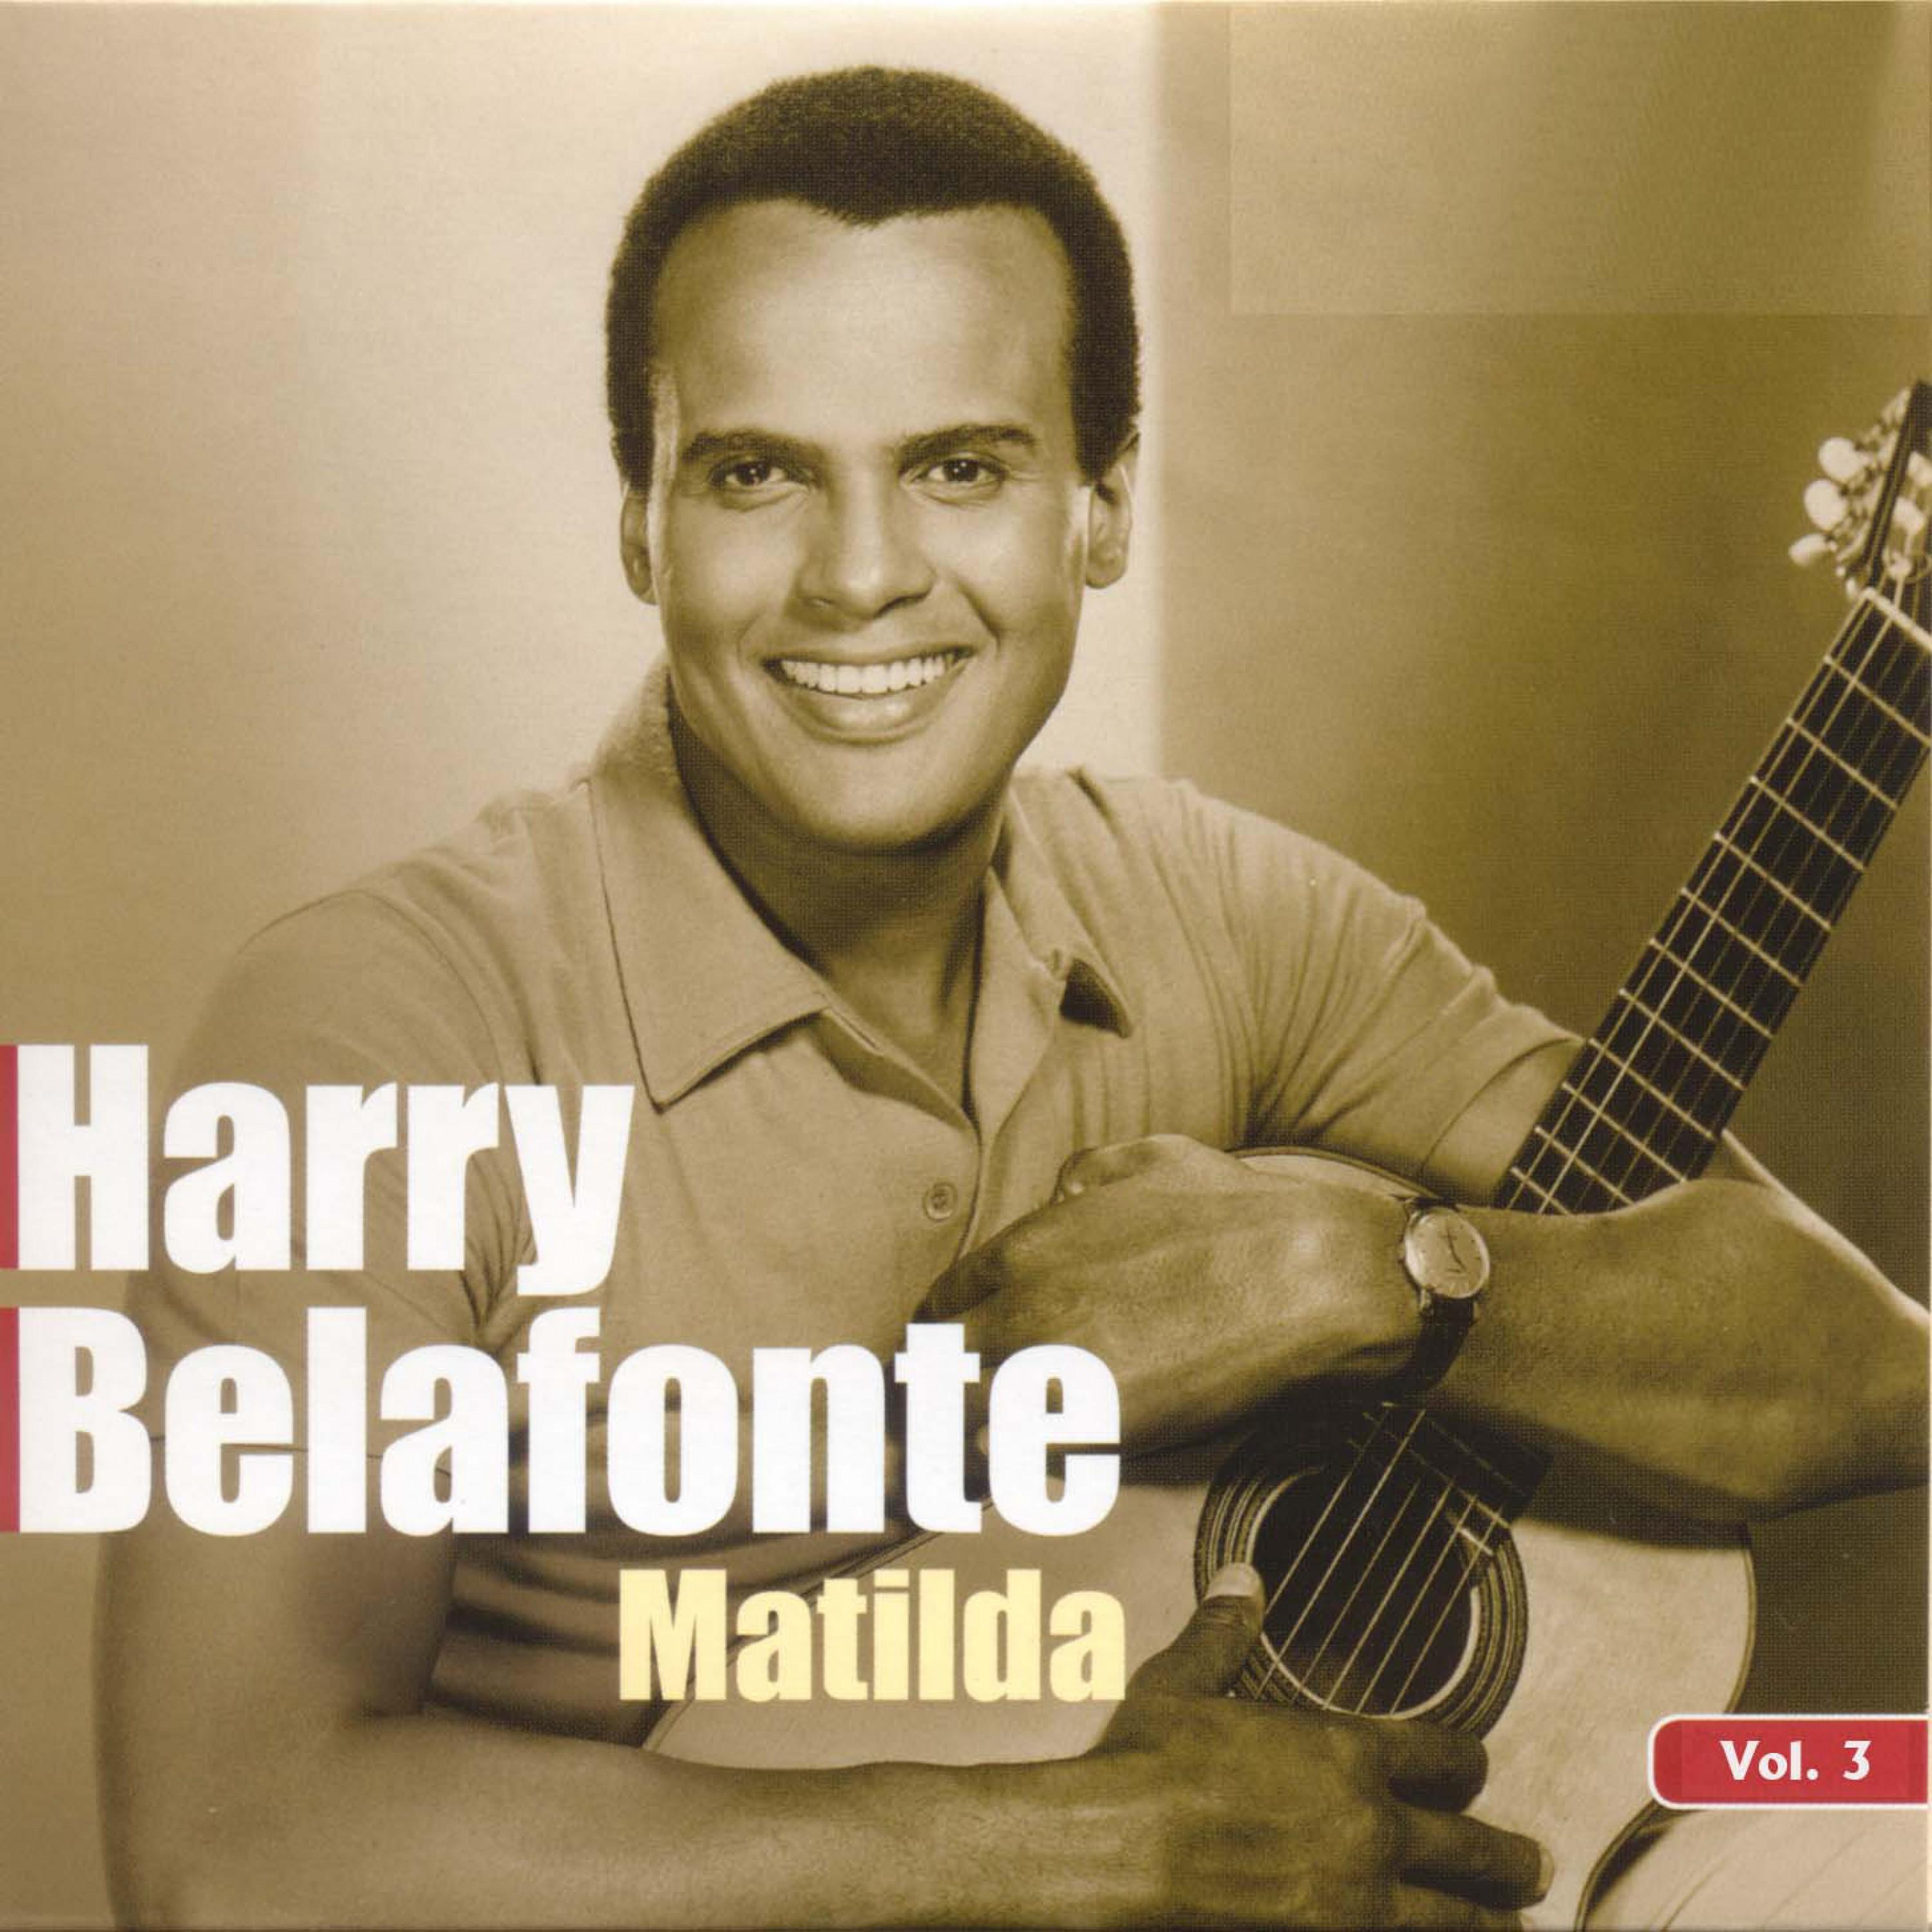 Harry Belafonte Vol. 3